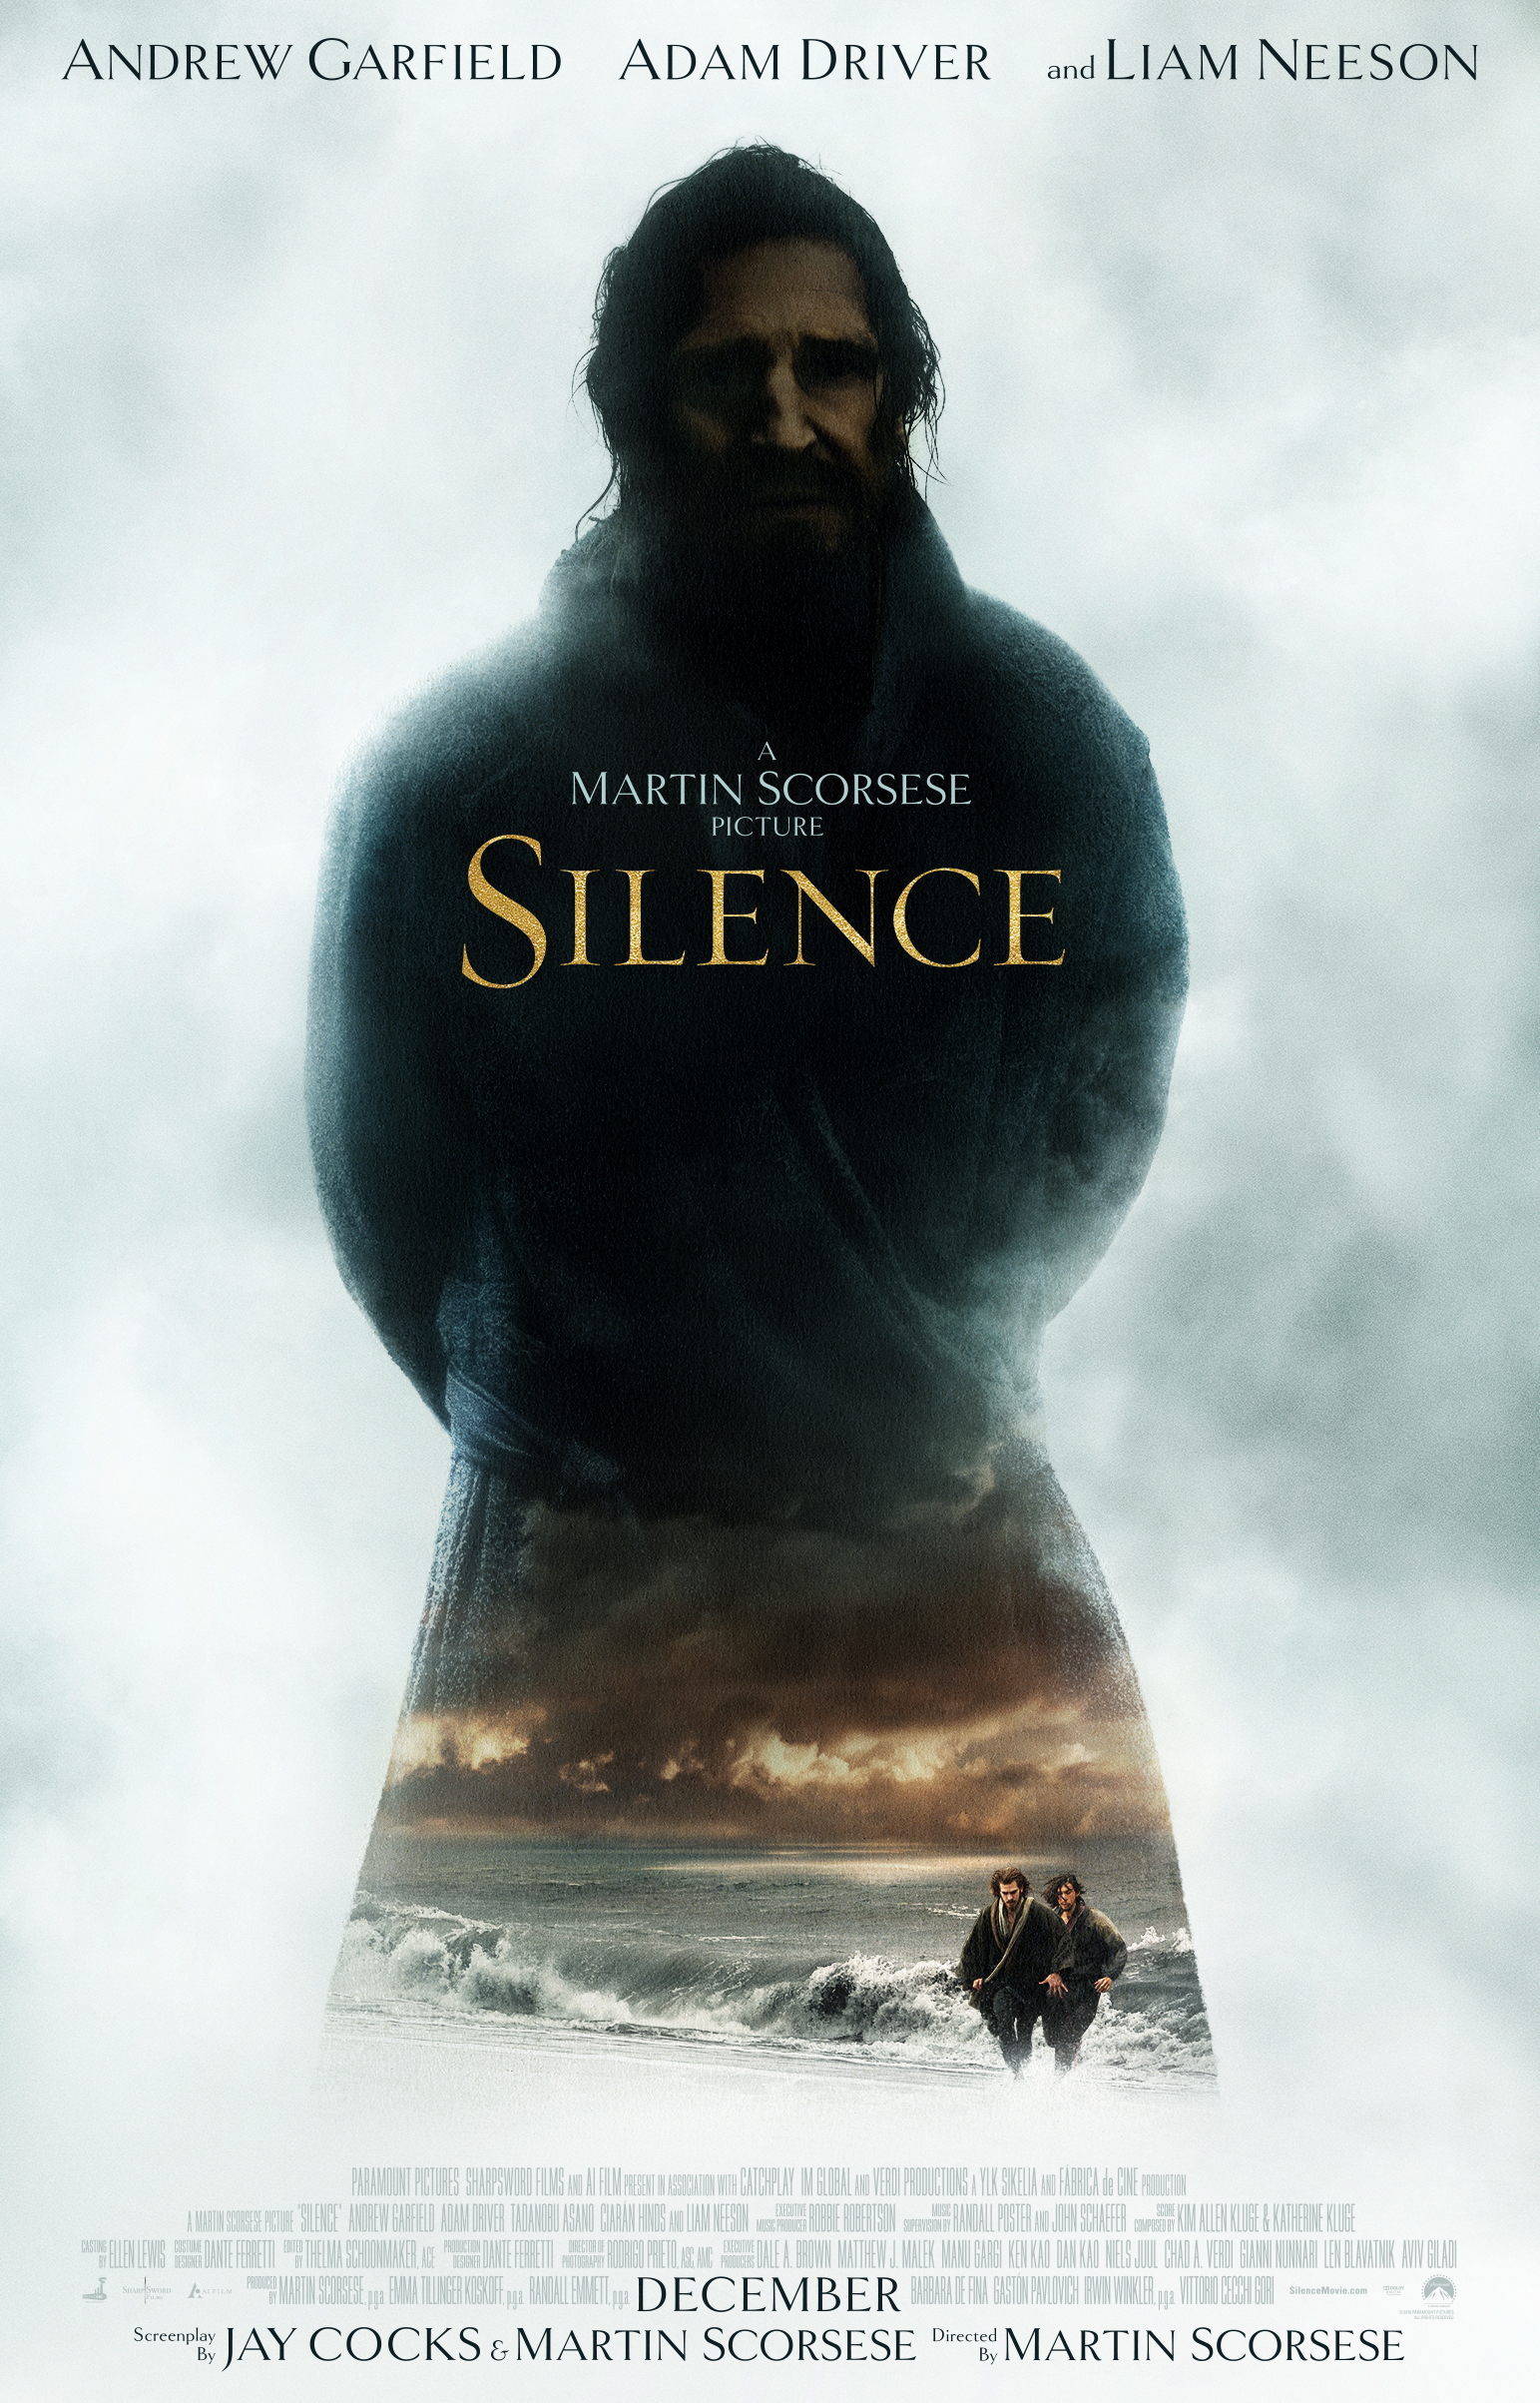 Watch Silence Hd Film 2016